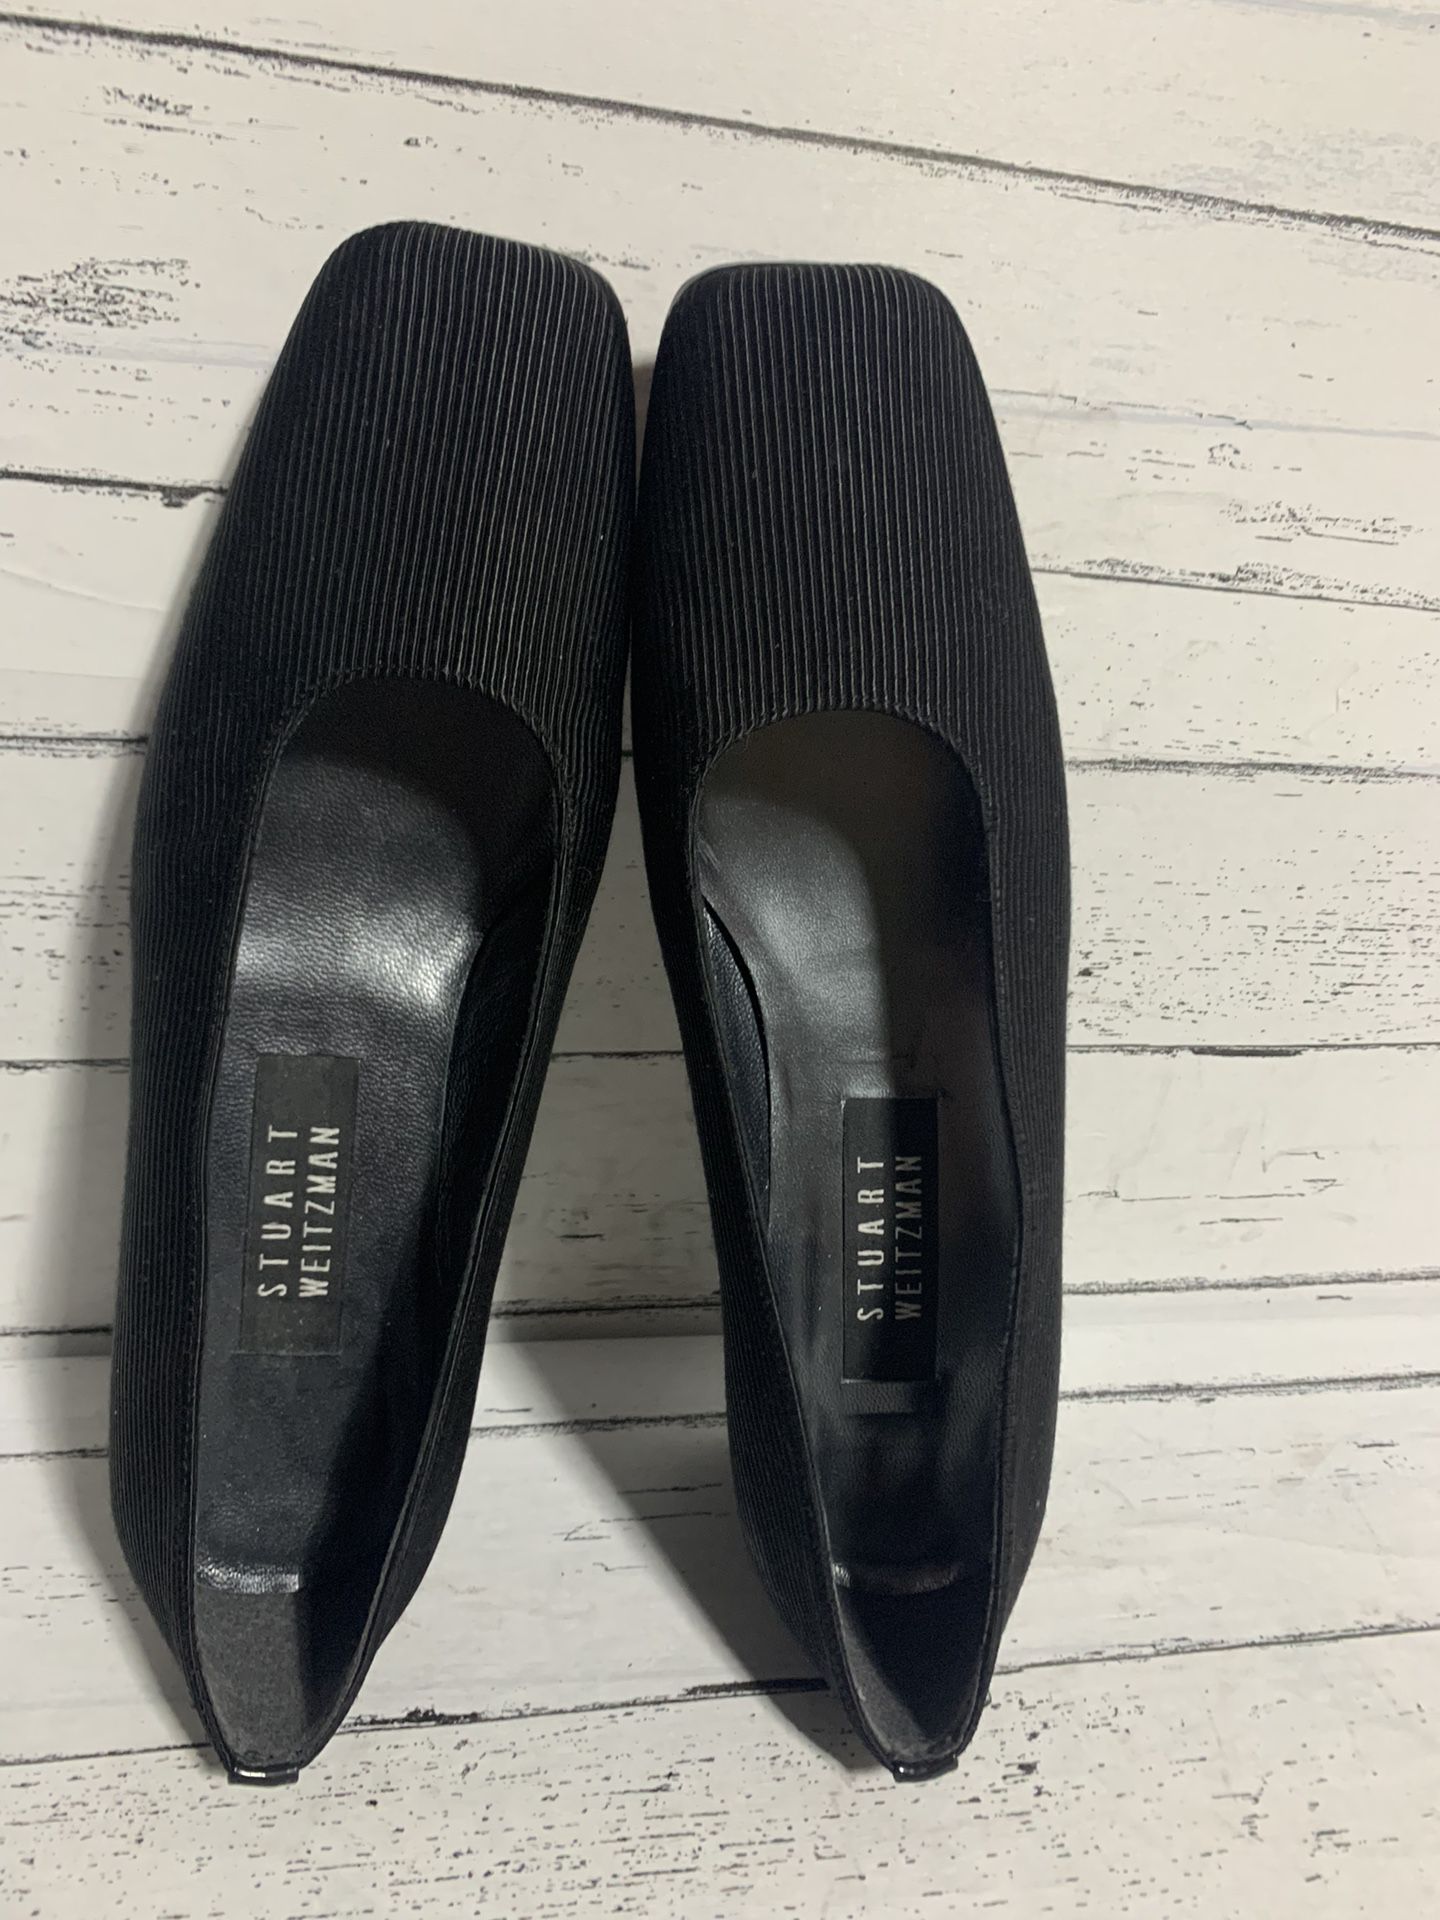 Stuart Weitzman women size 8.5C black pumps leather sole made in Spain shoes